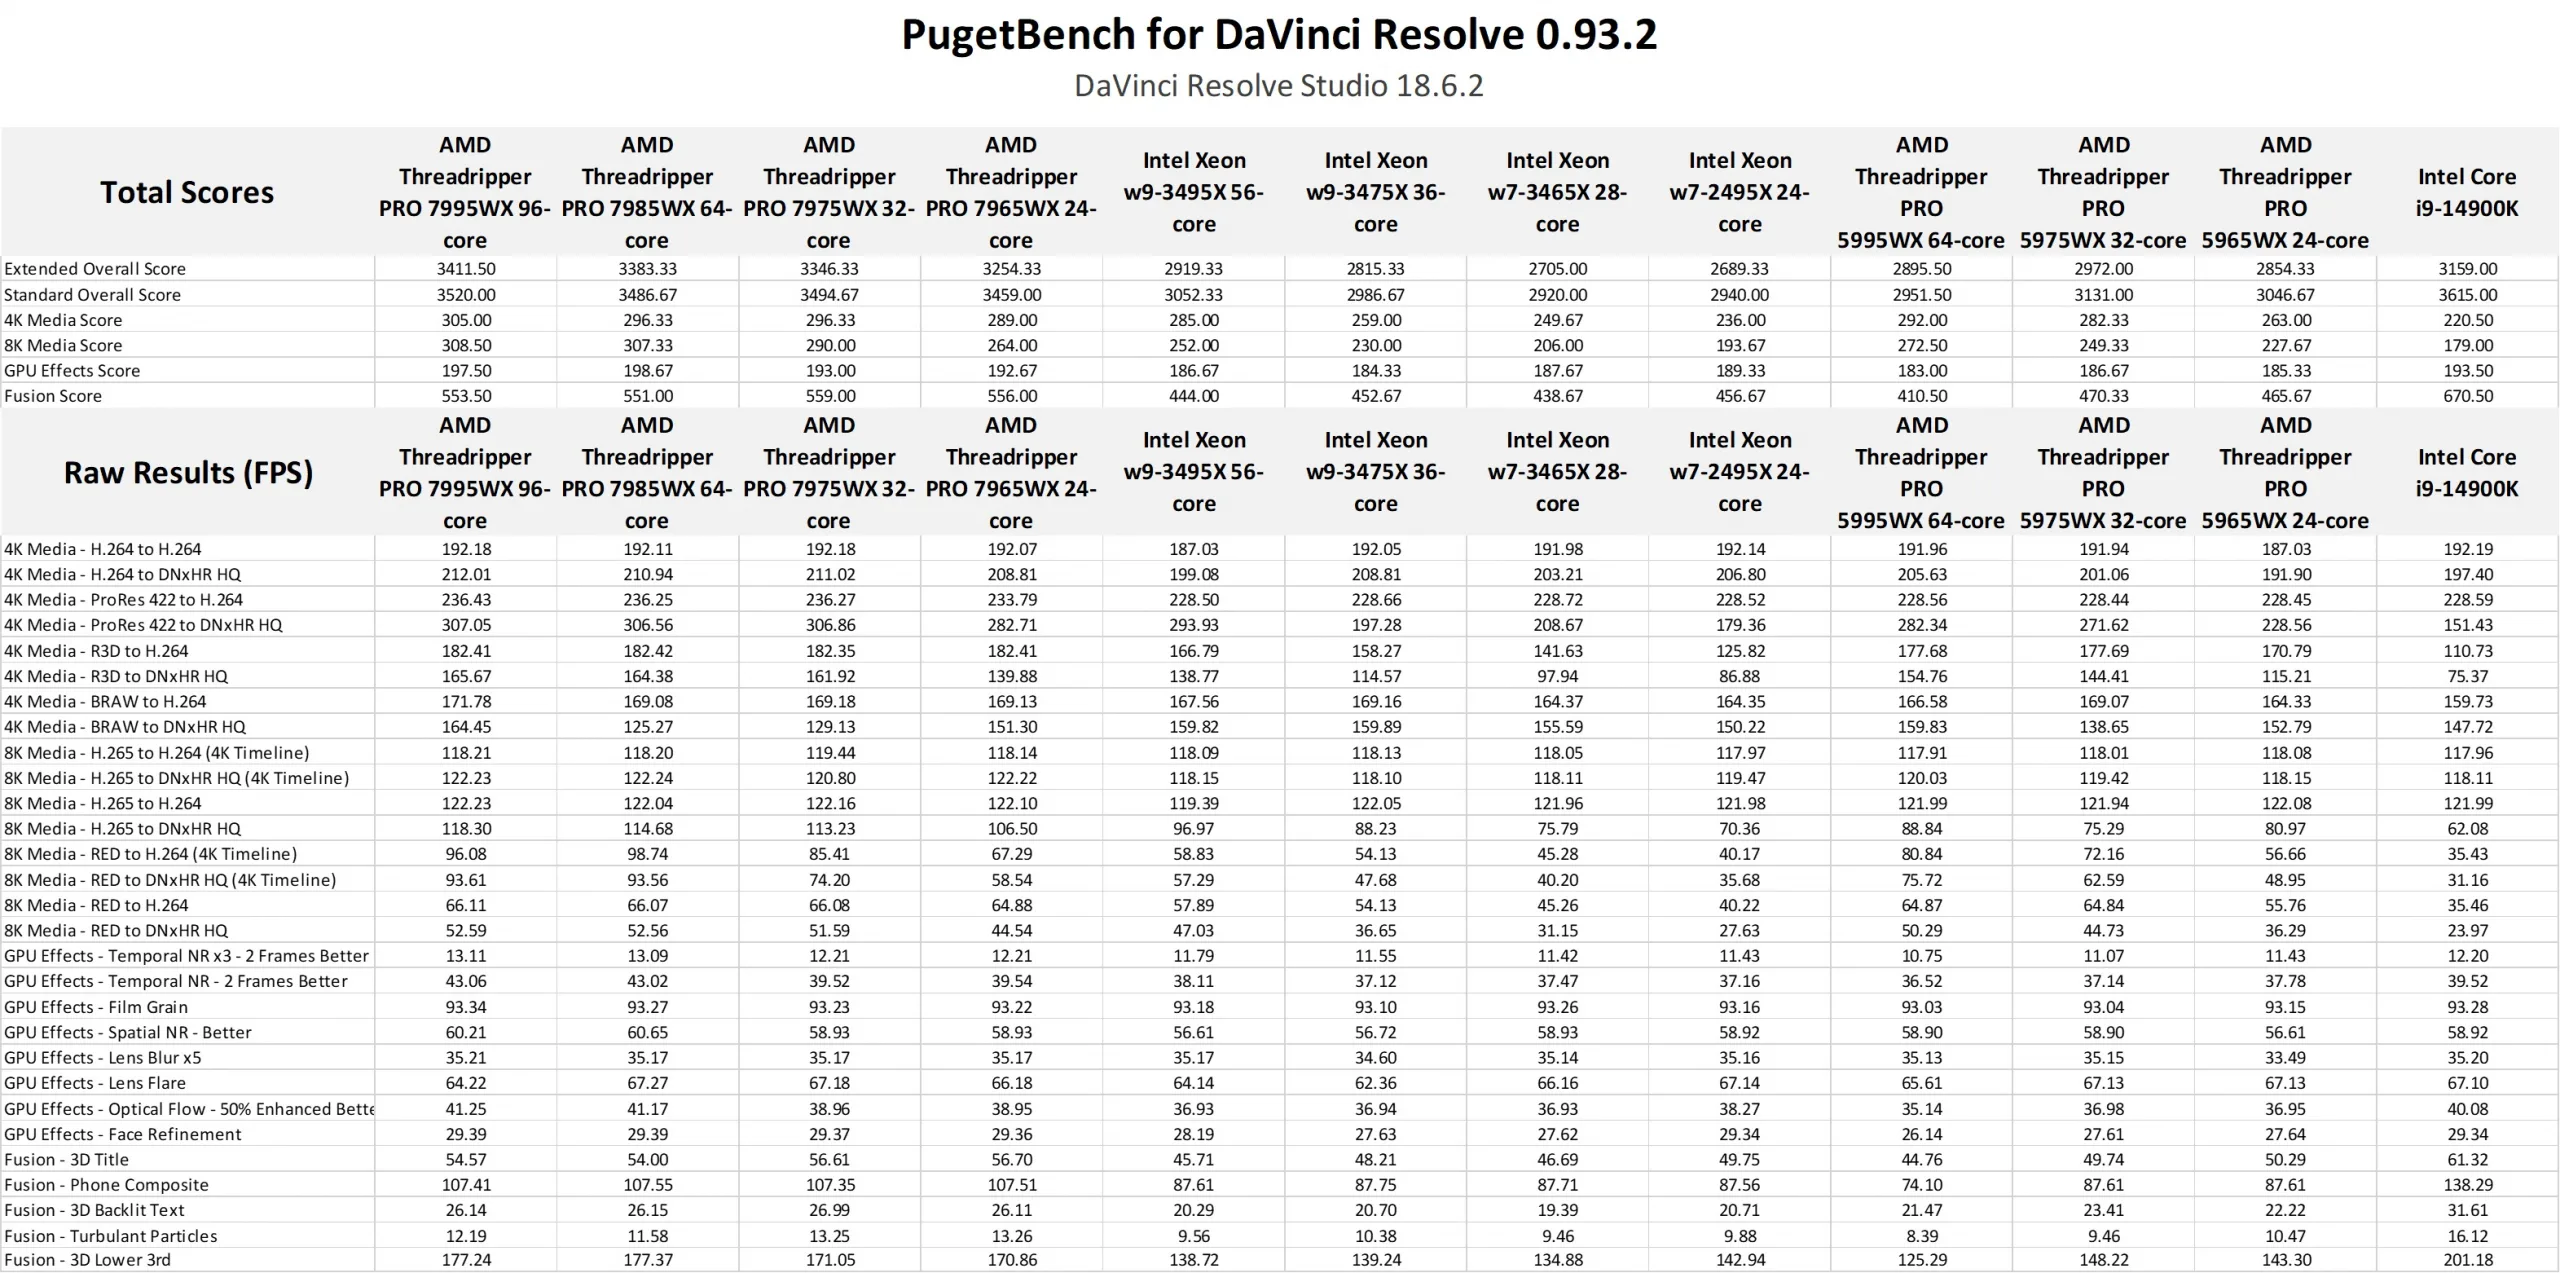 AMD Threadripper PRO 7000 WX-Series Benchmark Data for DaVinci Resolve